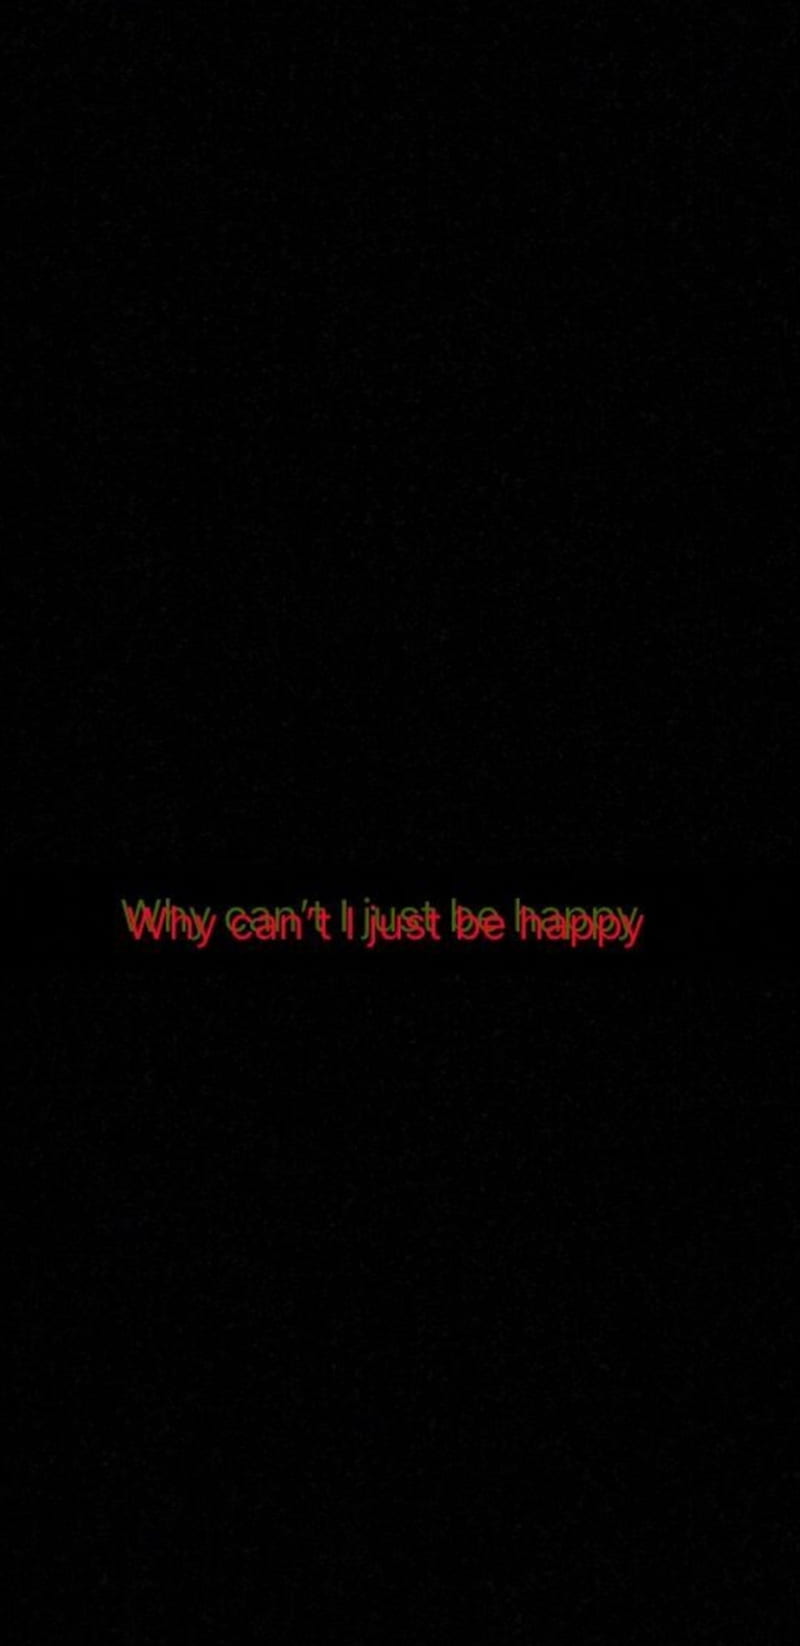 Why can't i just be happy - Sad, dark red, black, dark, couple, depressing, black glitch, depression